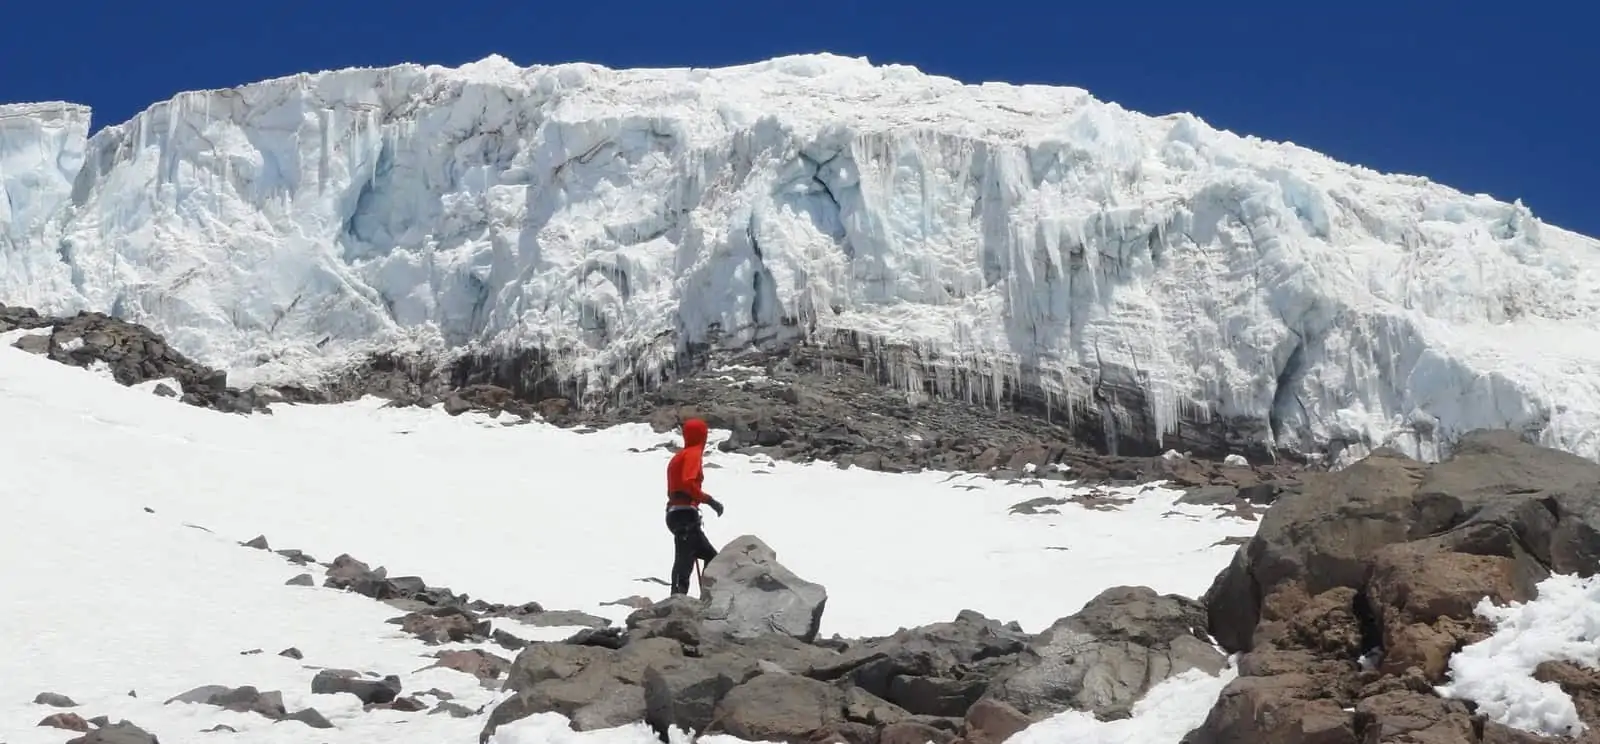 Mount Rainier Kautz Glacier - Hero's Journey in Real Life